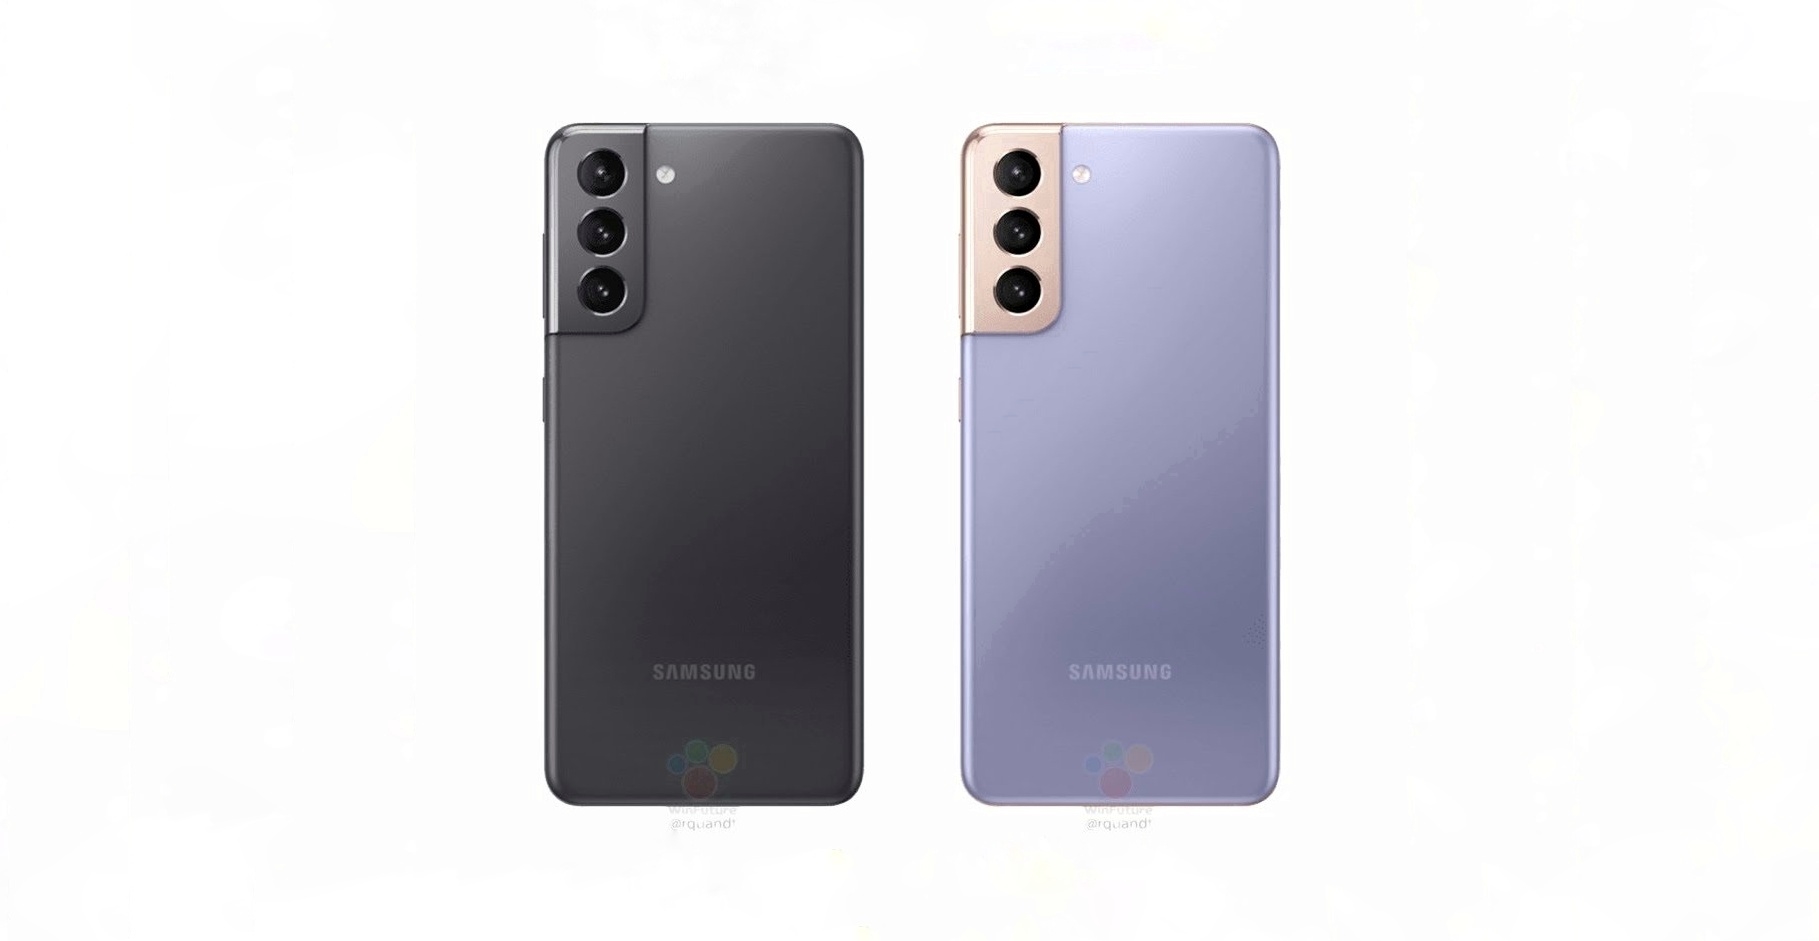 Samsung Galaxy S21 colors